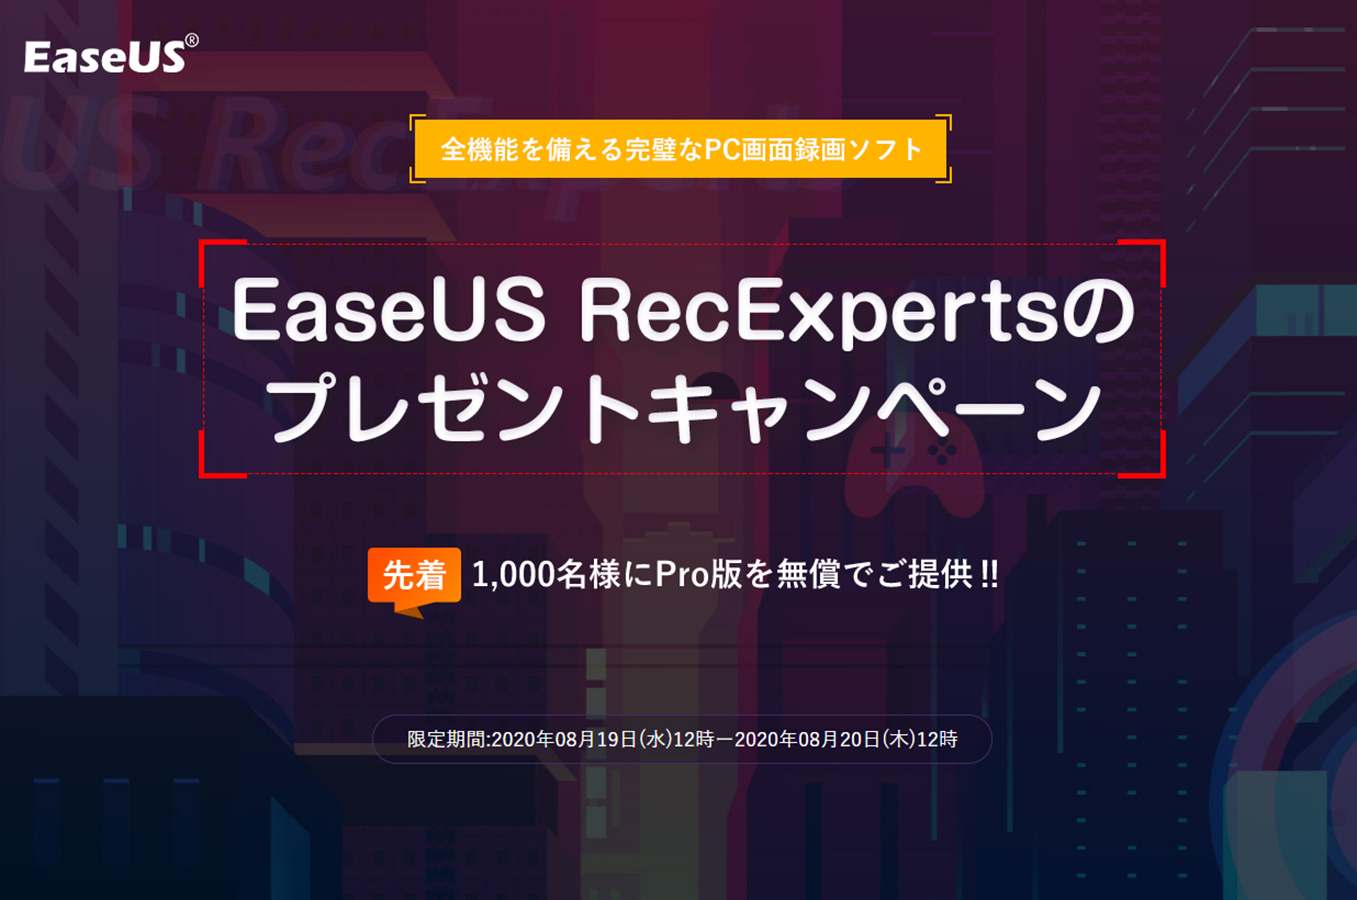 EaseUS RecExperts Proが先着で無償配布